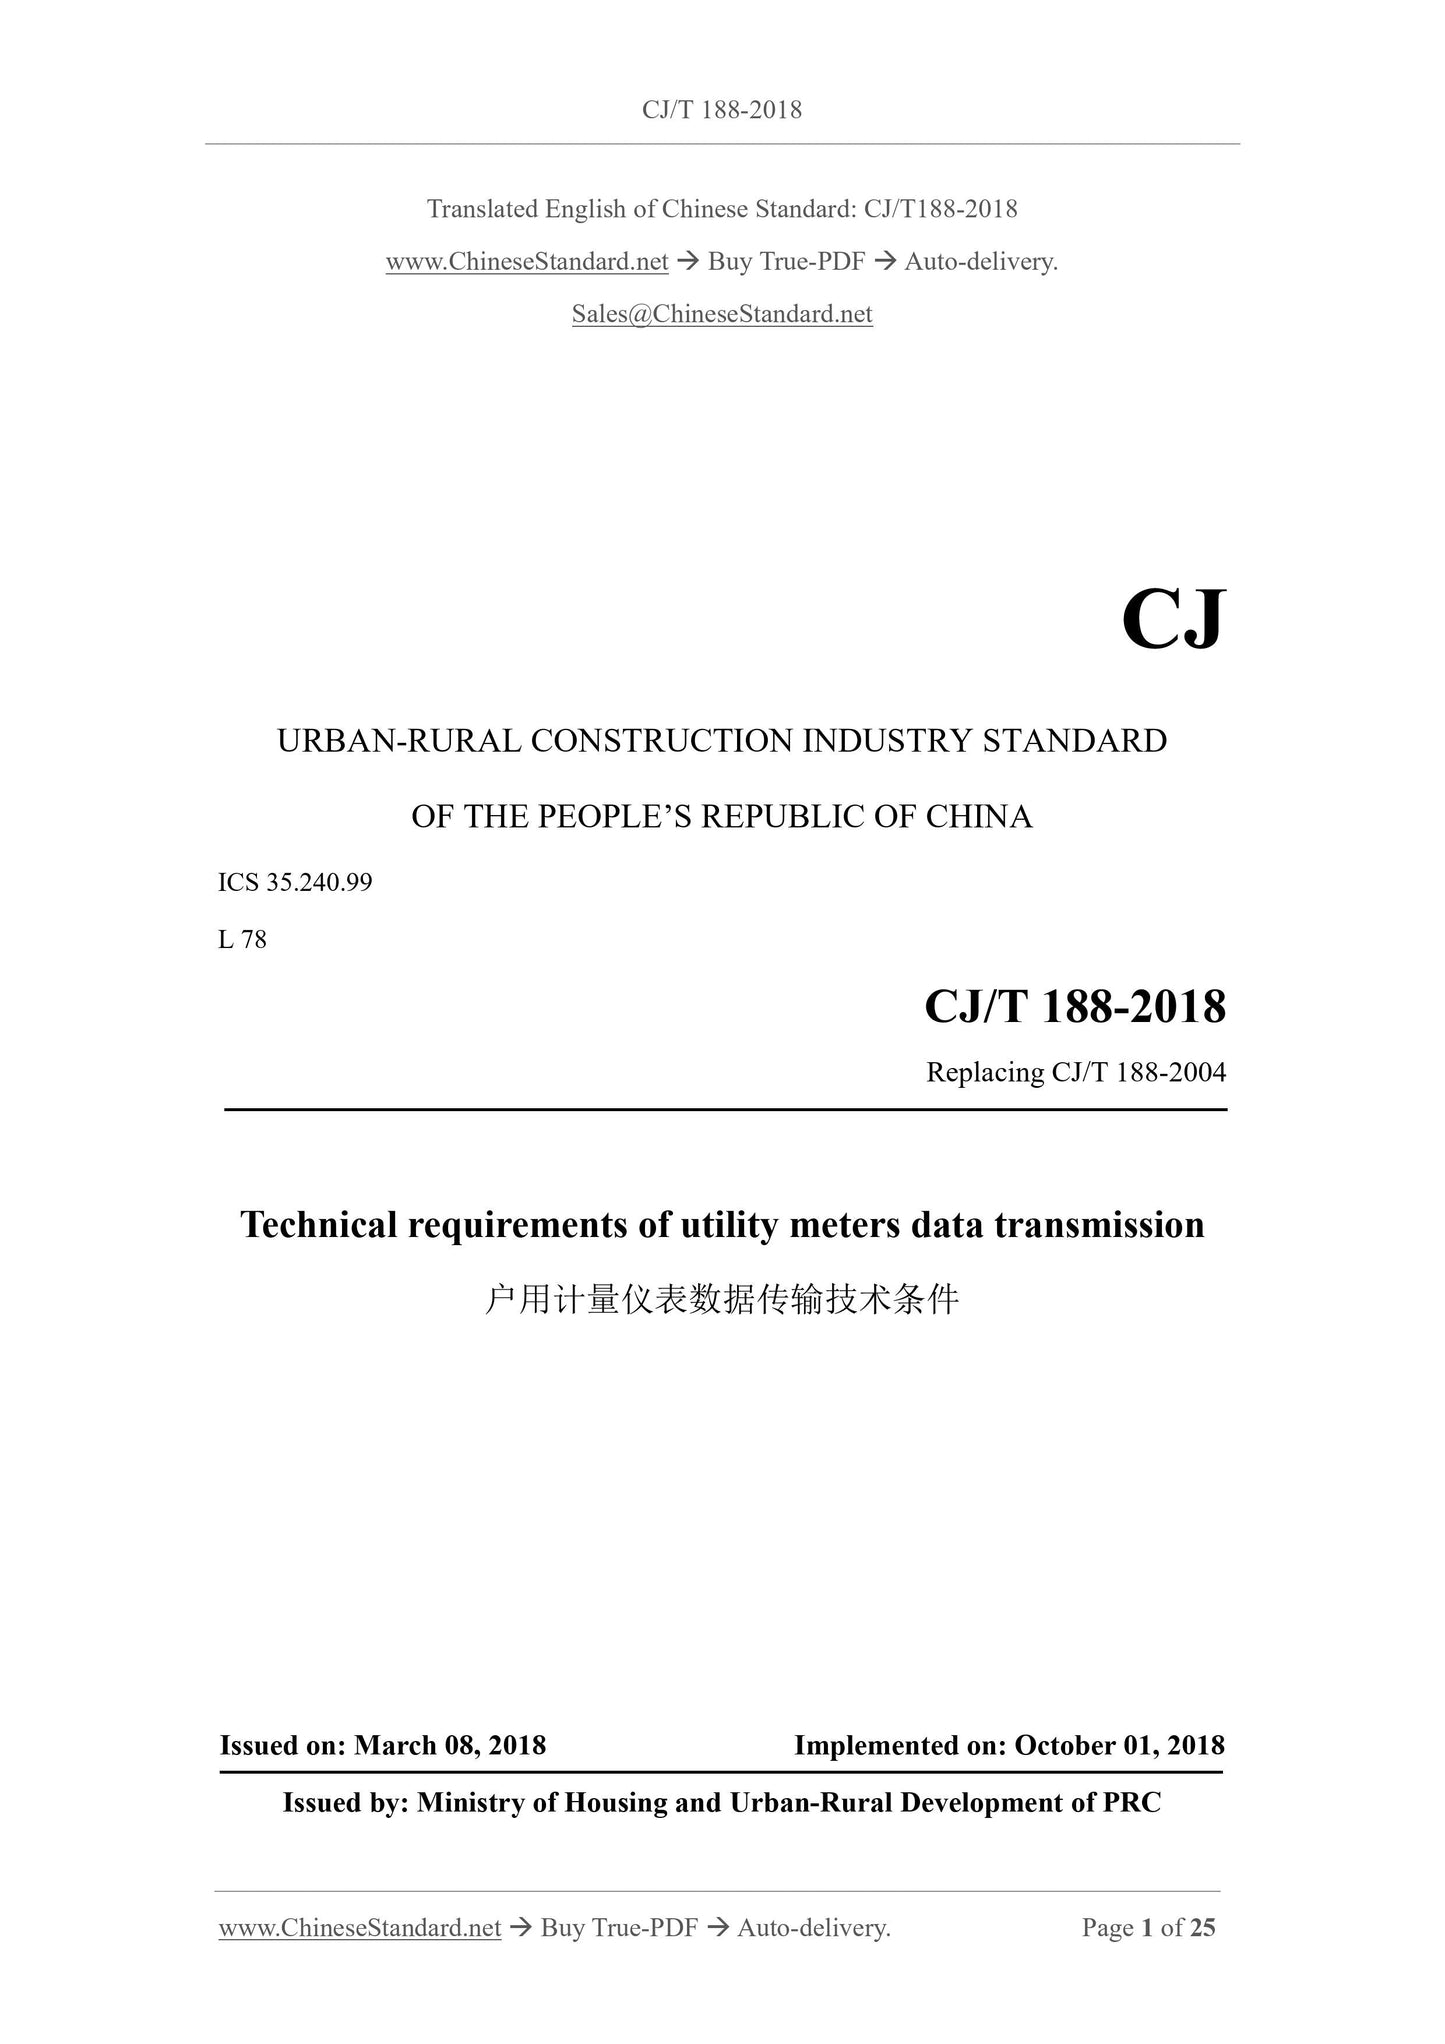 CJ/T 188-2018 Page 1